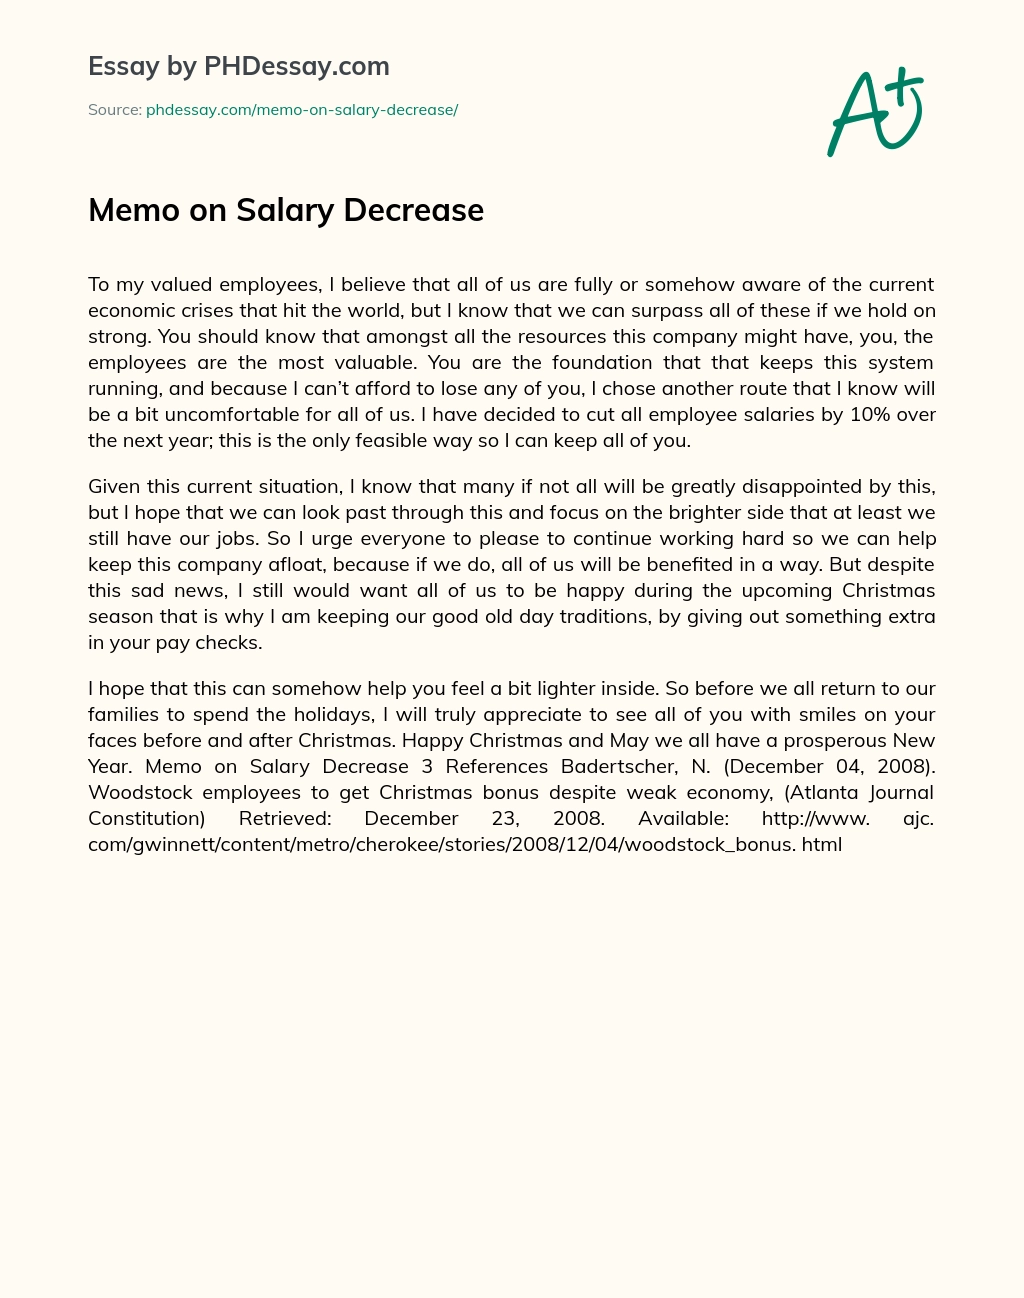 Memo on Salary Decrease essay